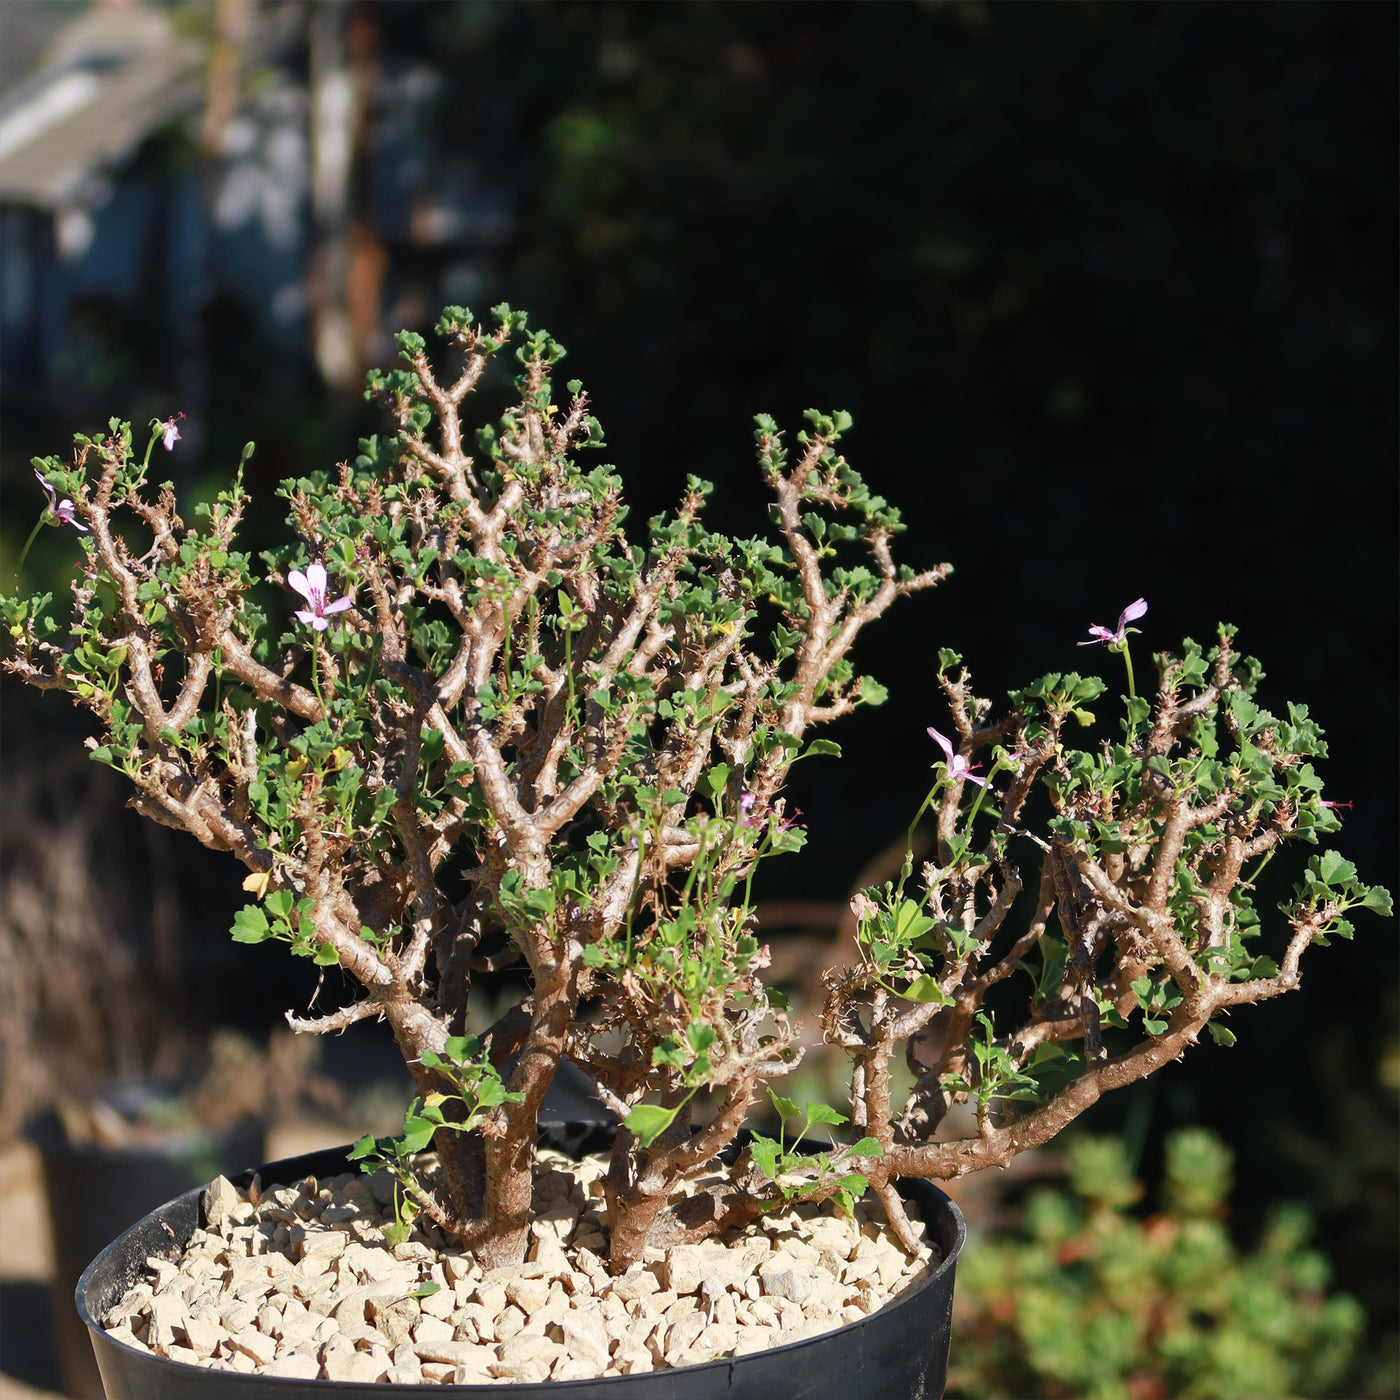 Pelargonium xerophyton